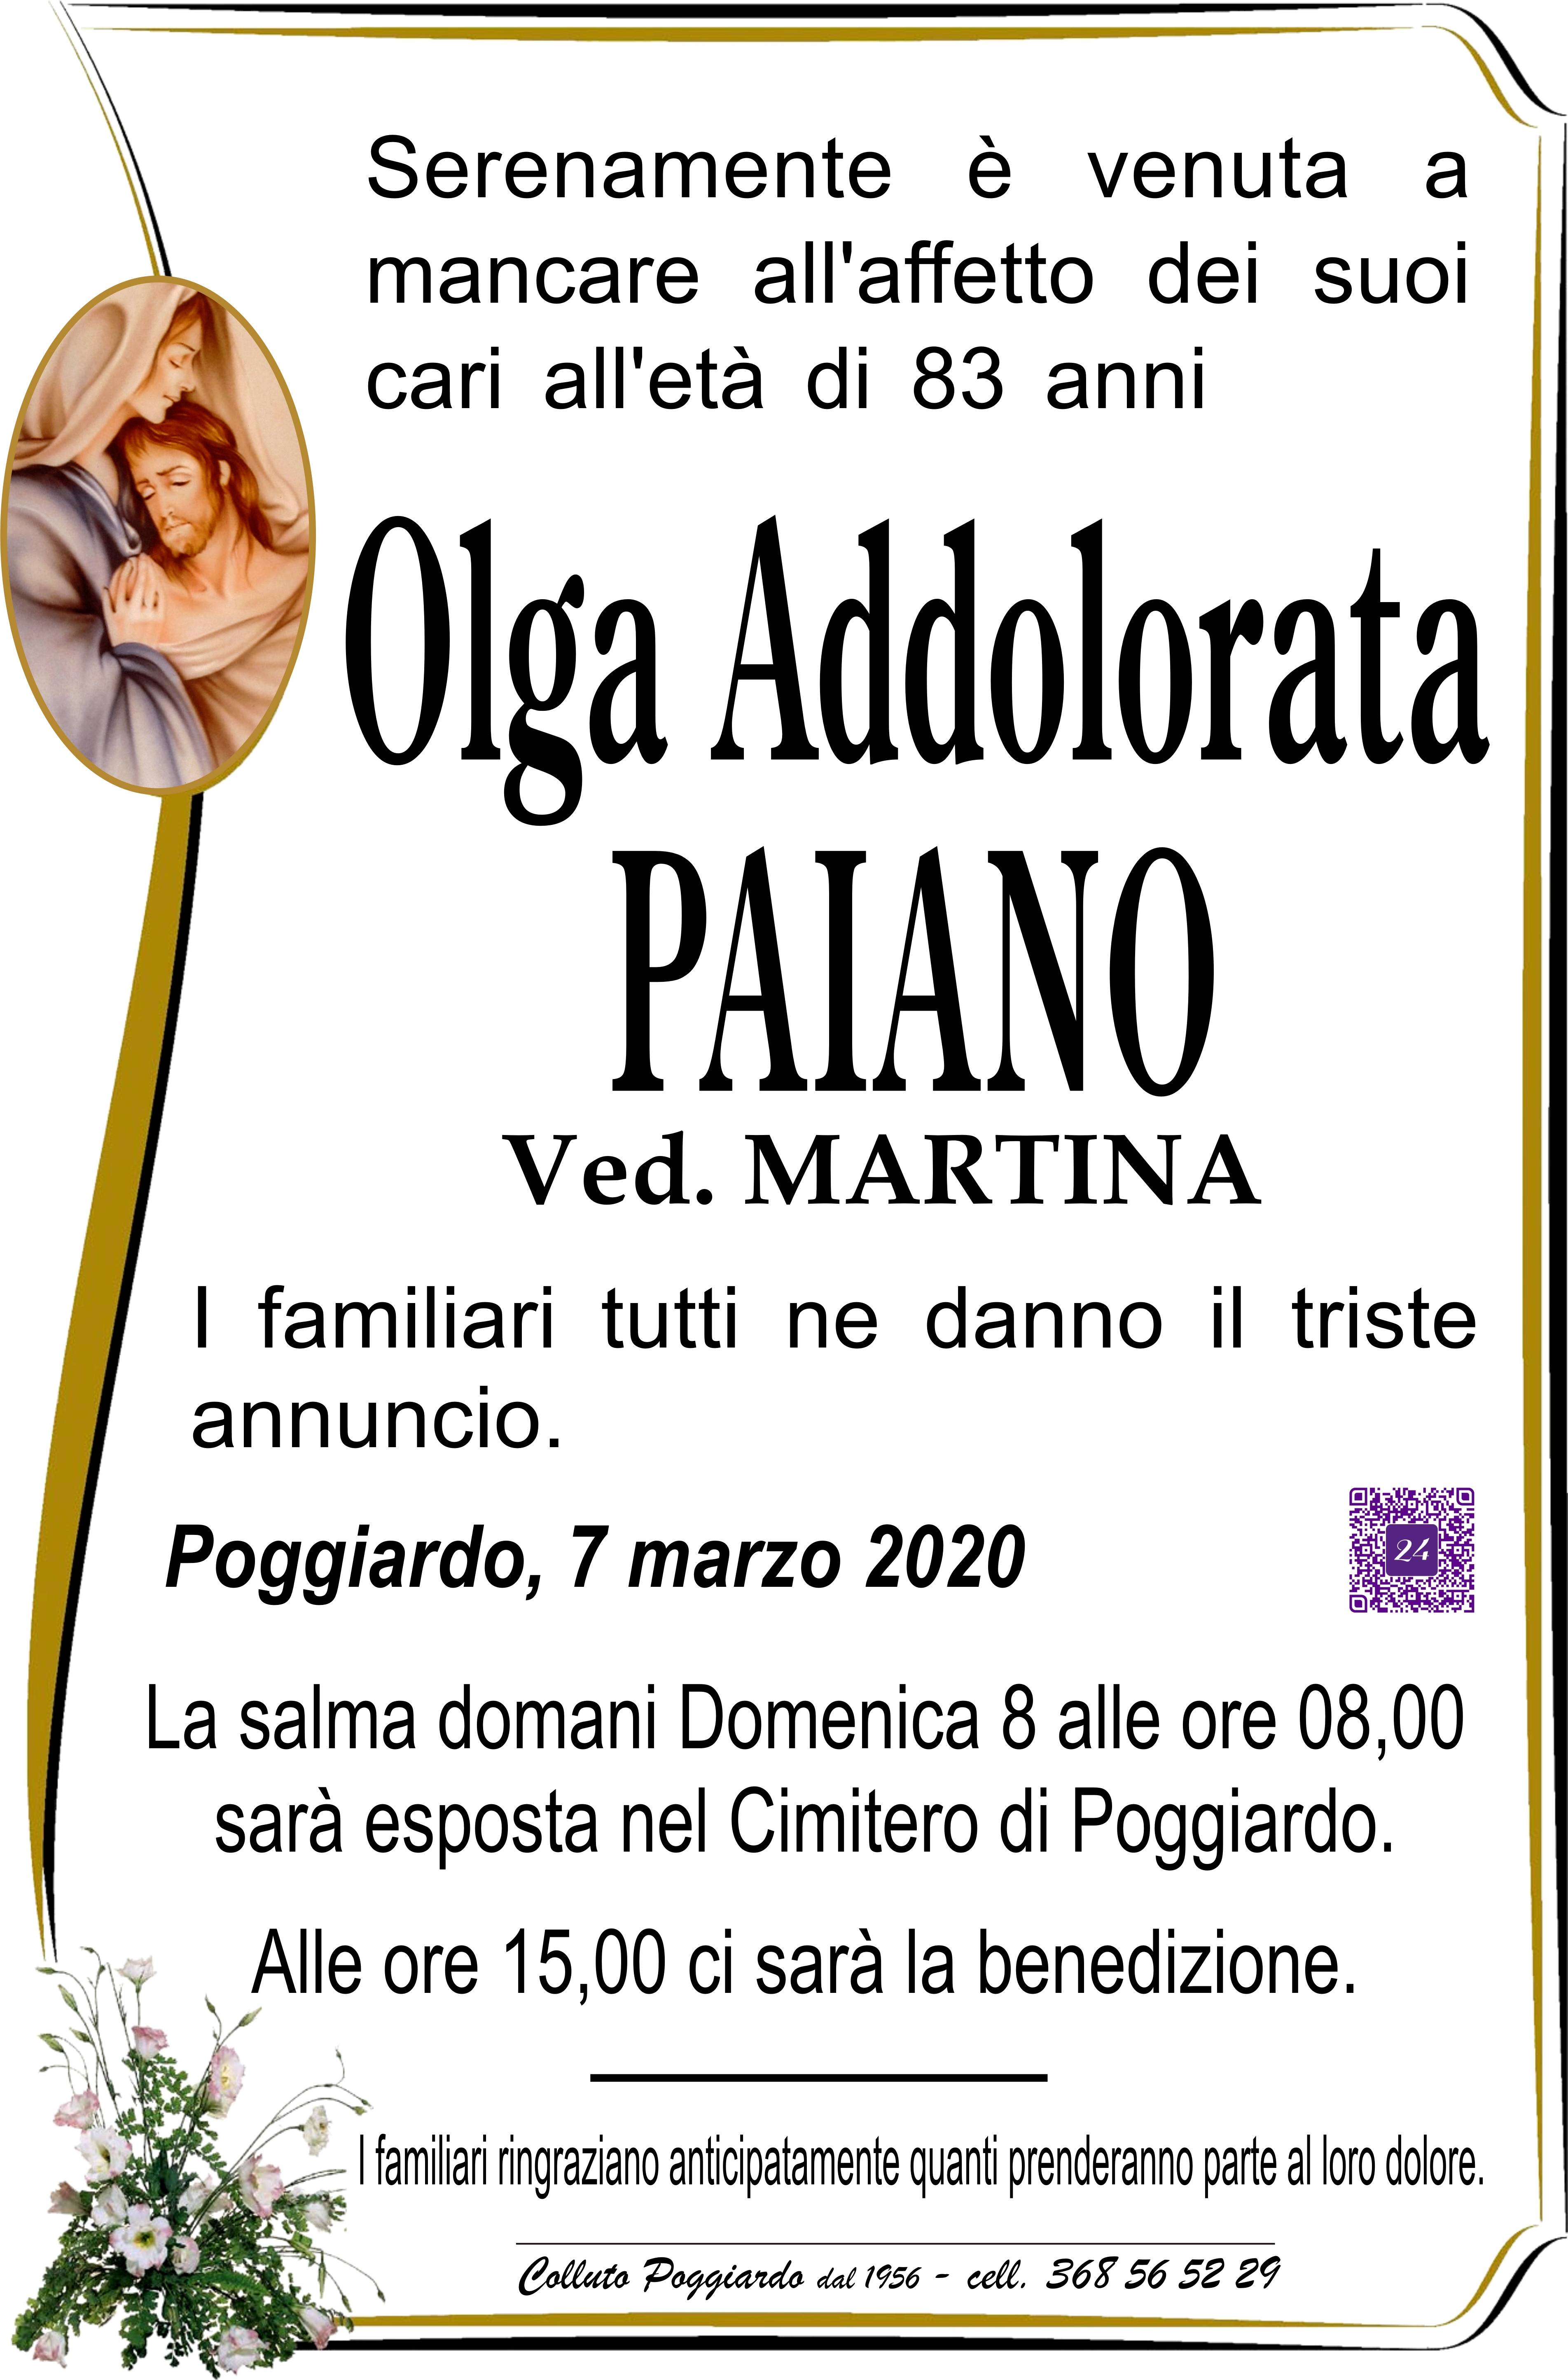 Olga Addolorata Paiano